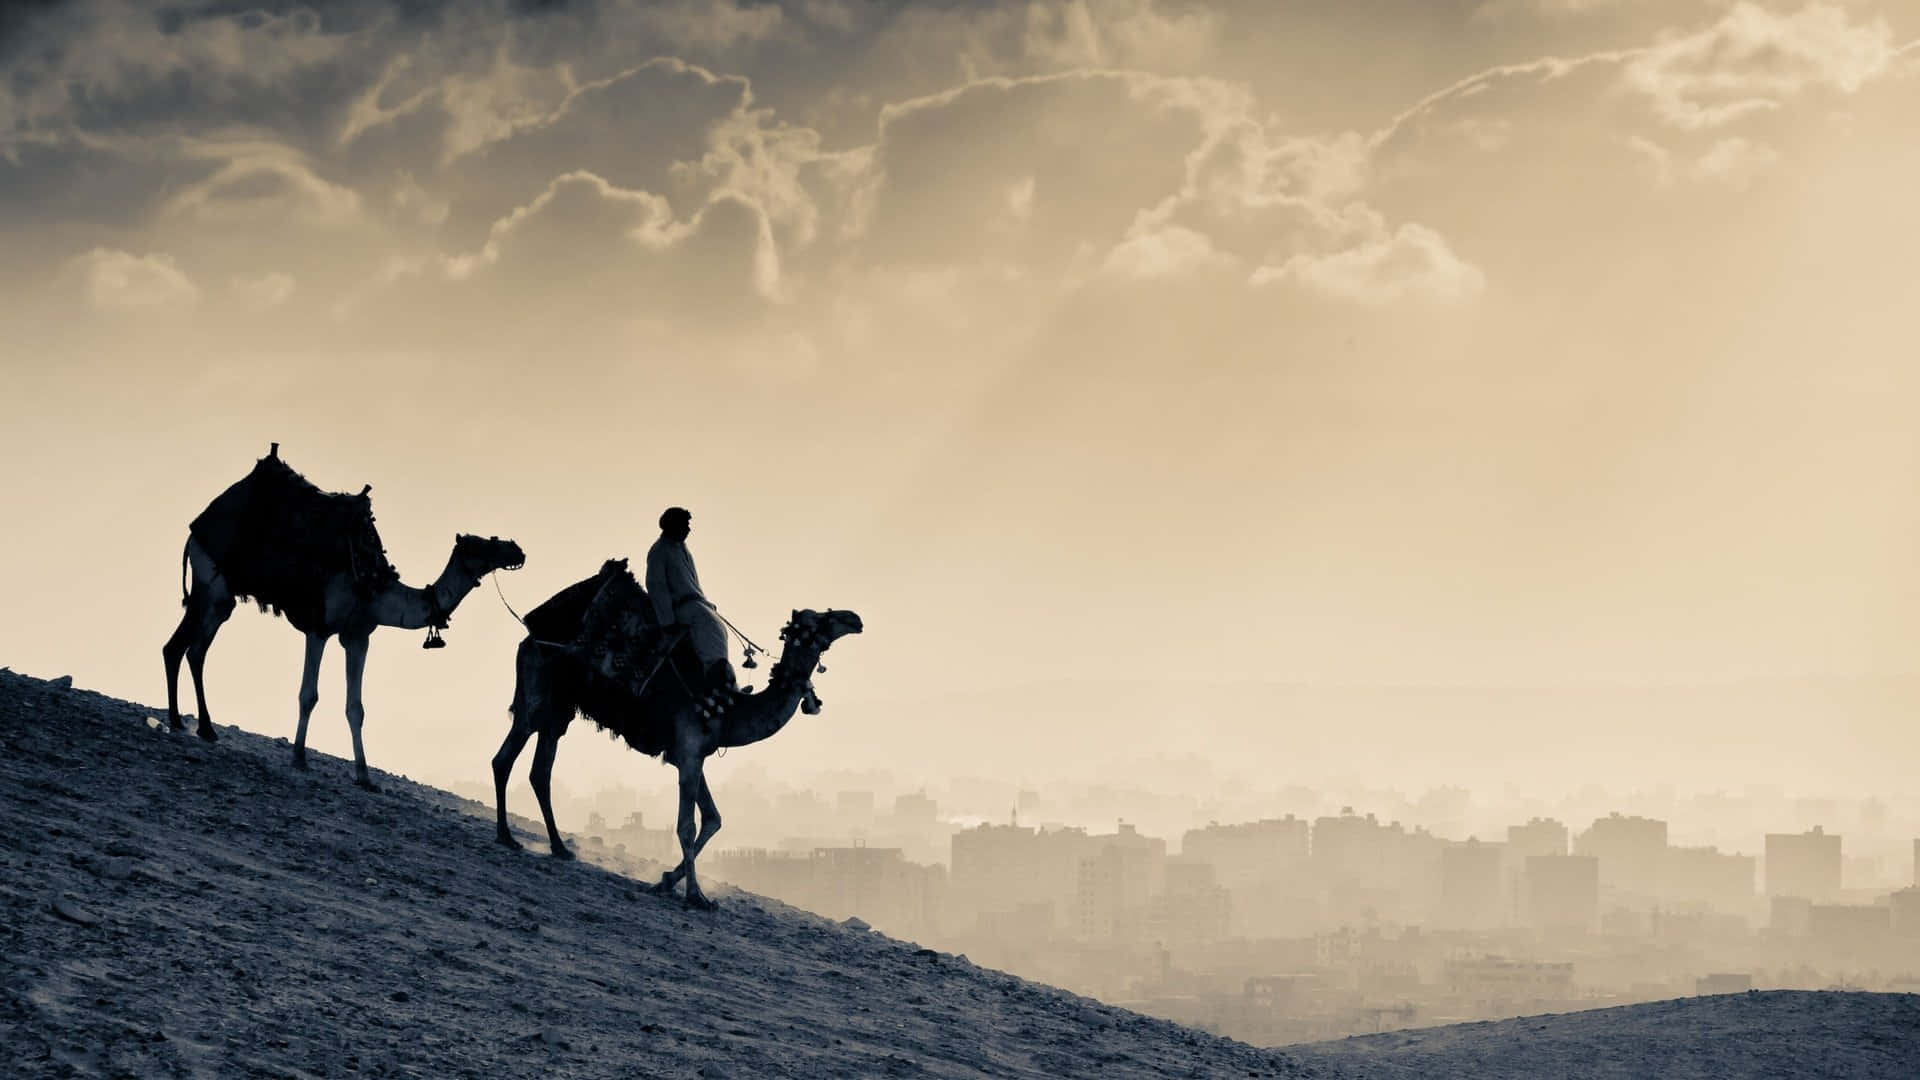 A majestic camel sauntering in the Sahara desert